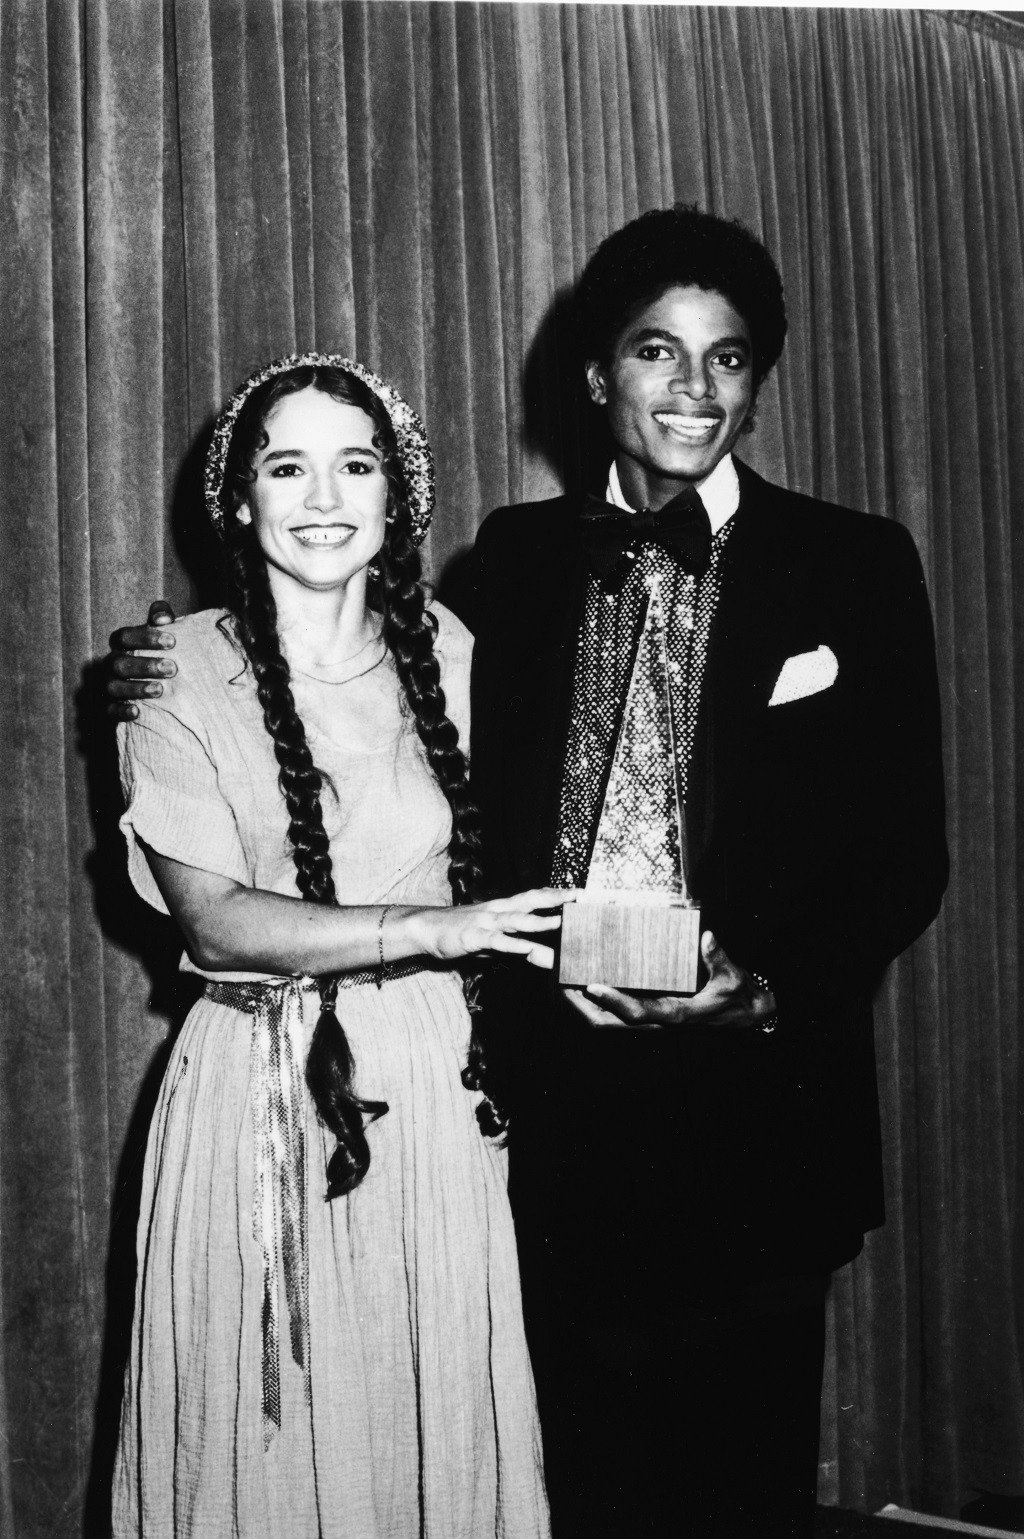 Michael Jackson with Nicolette Larson